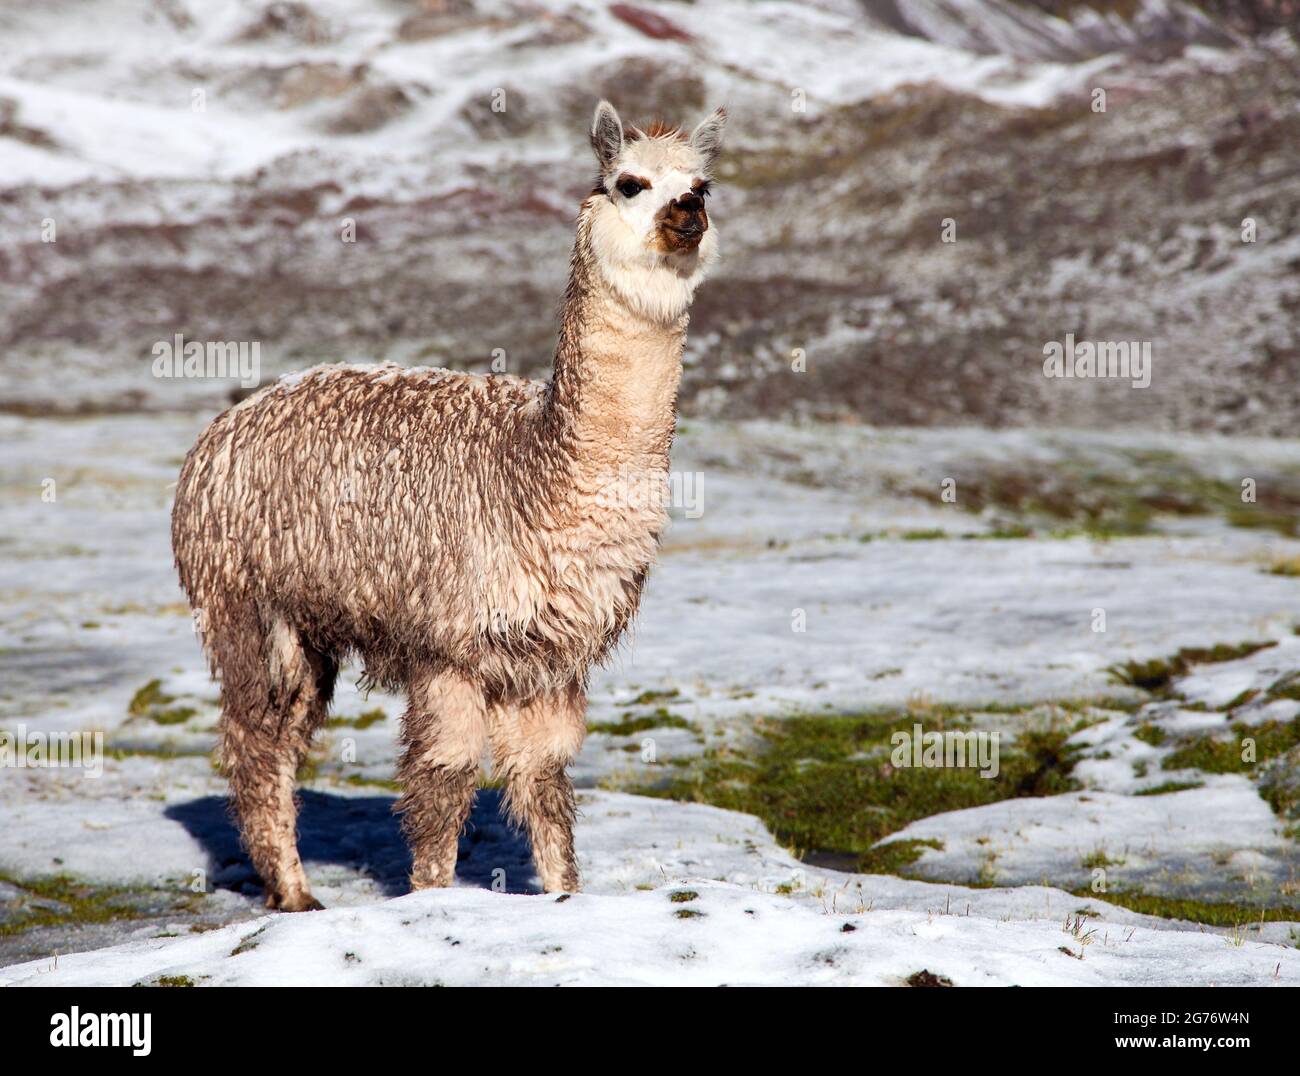 llama or lama on snowy mountain, Peruvian Andes mountais Stock Photo